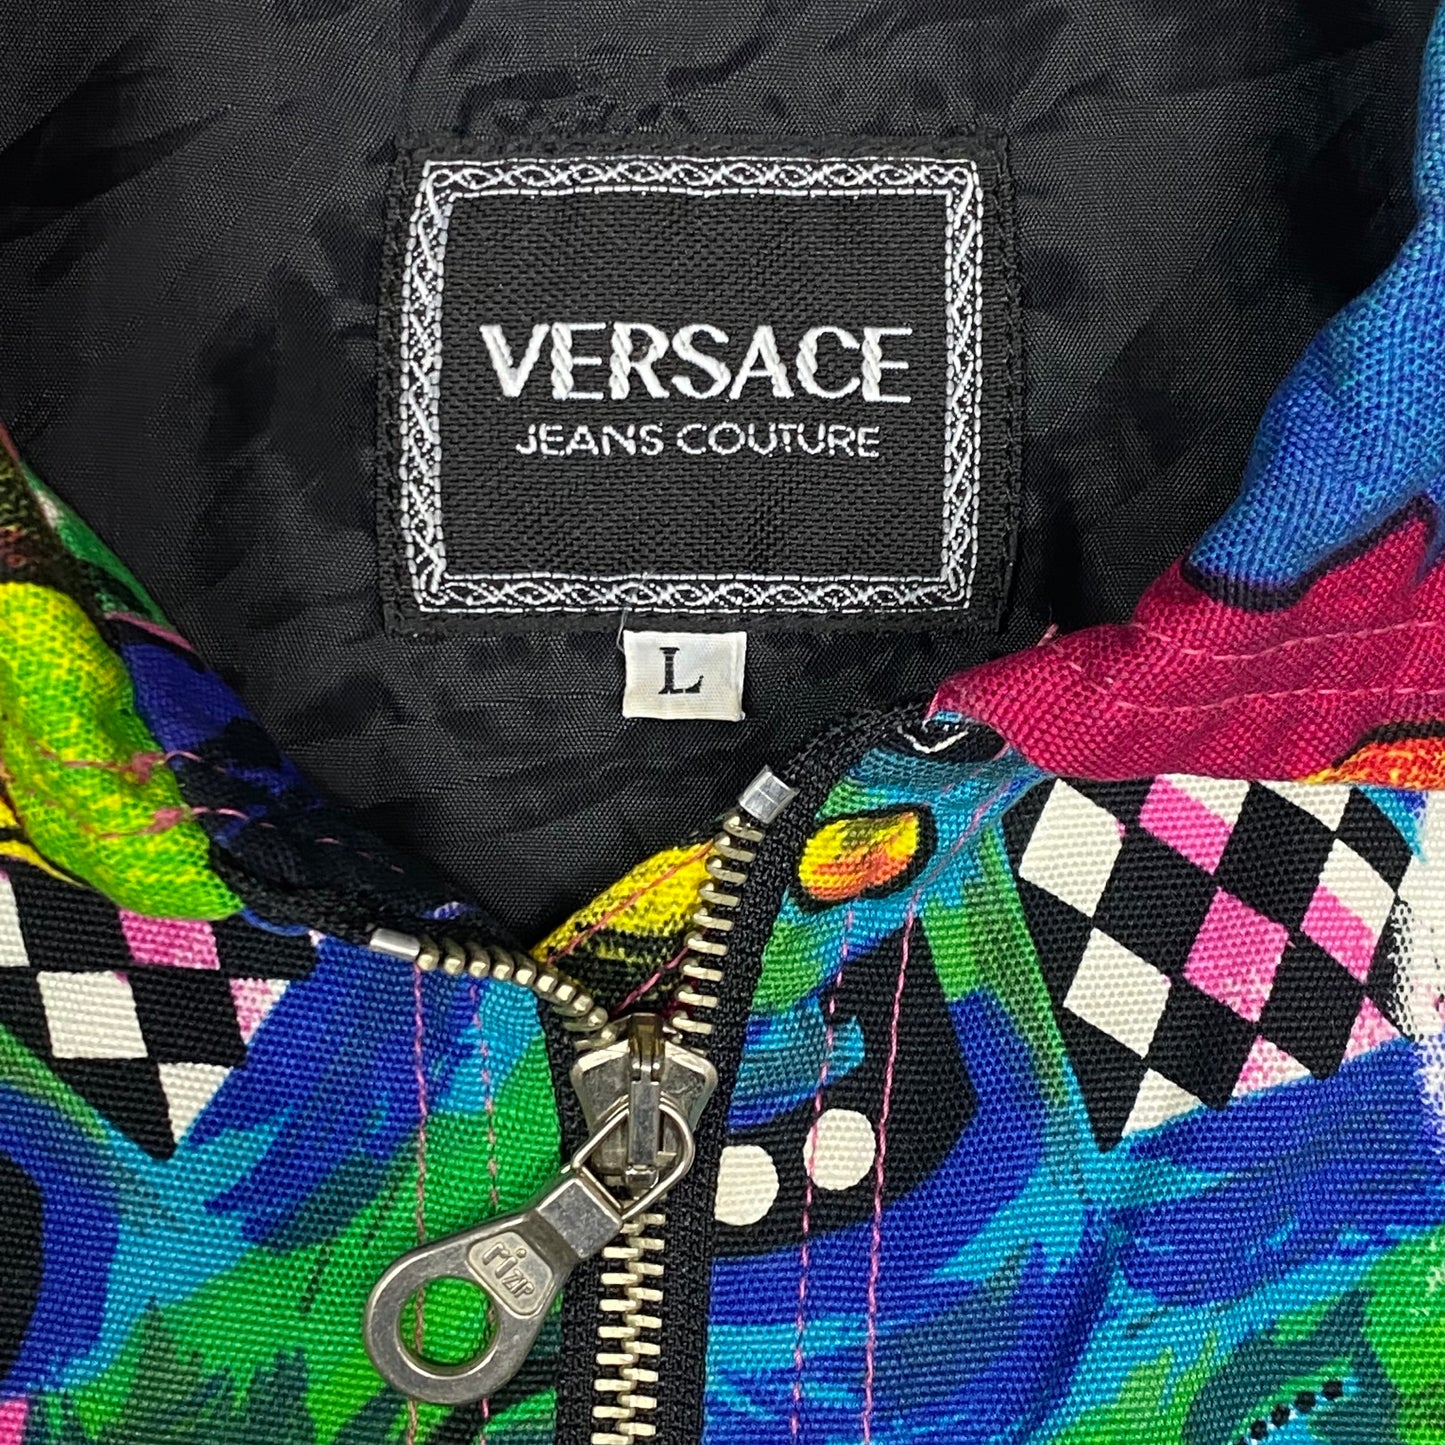 Versace VJC 1993 Betty Boop Marilyn Monroe Jacket - M/L